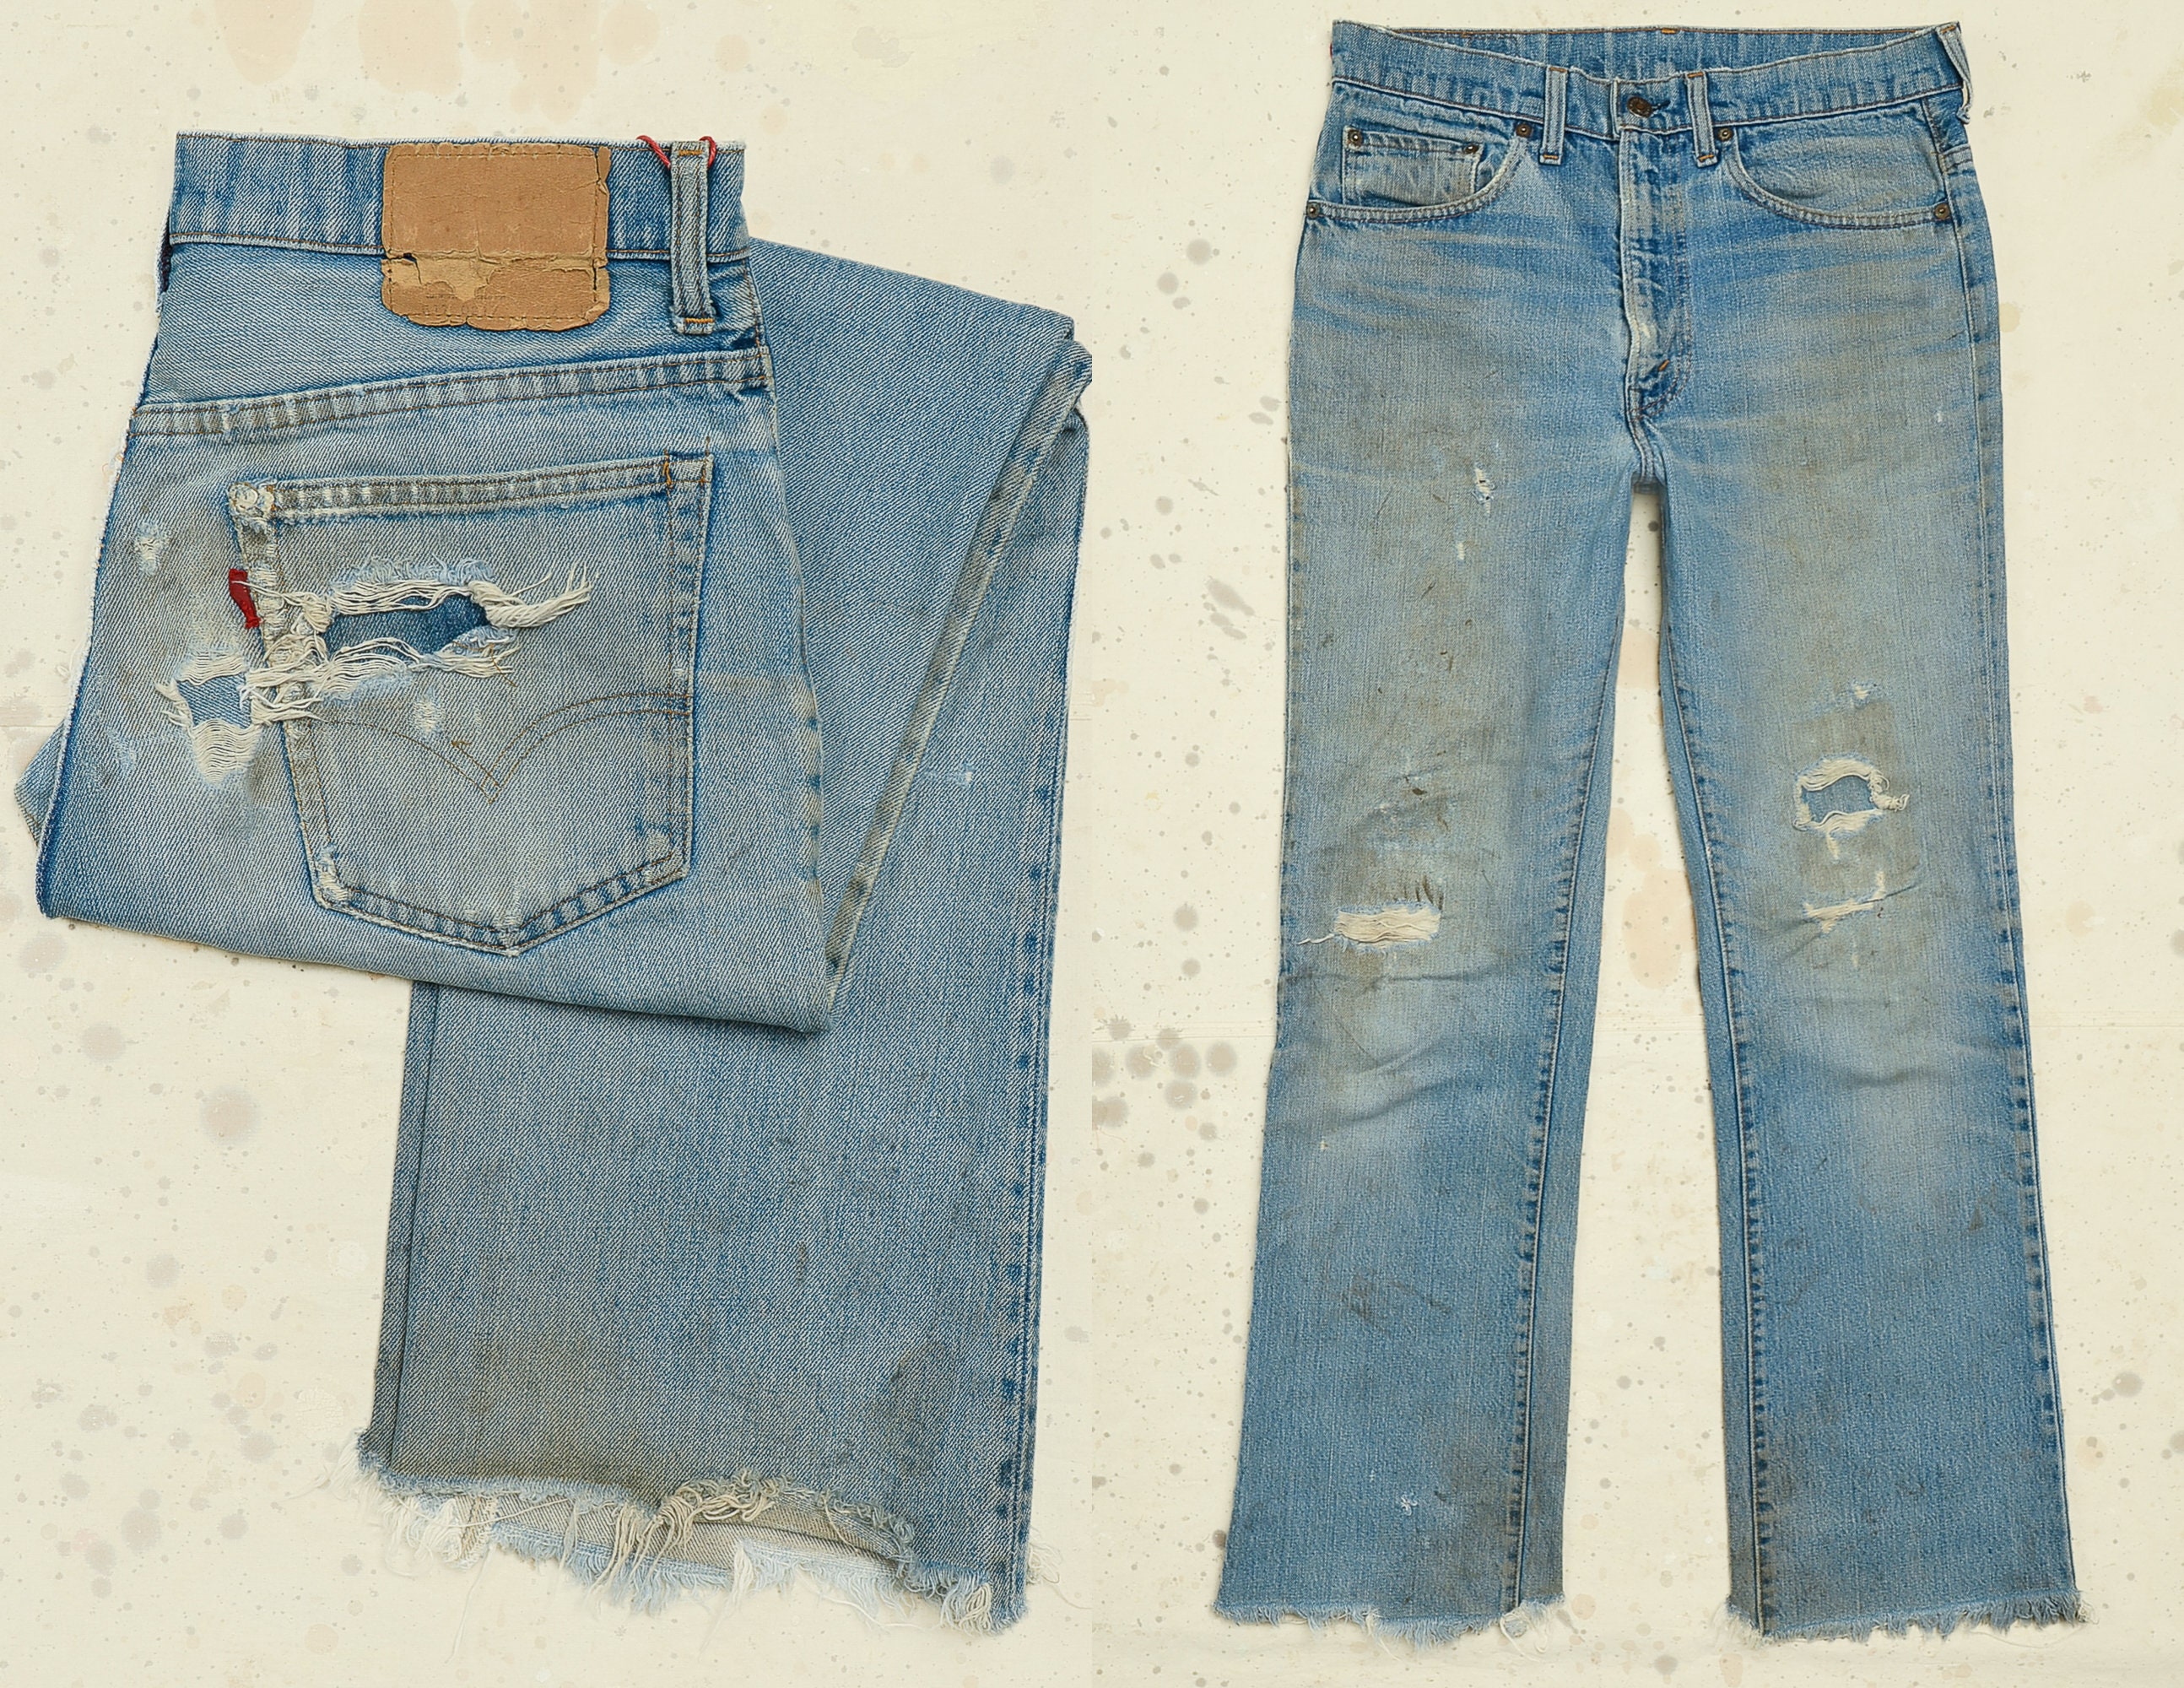 Hippie Boho Gypsy Patchwork Denim Blue Jeans Made to Order 